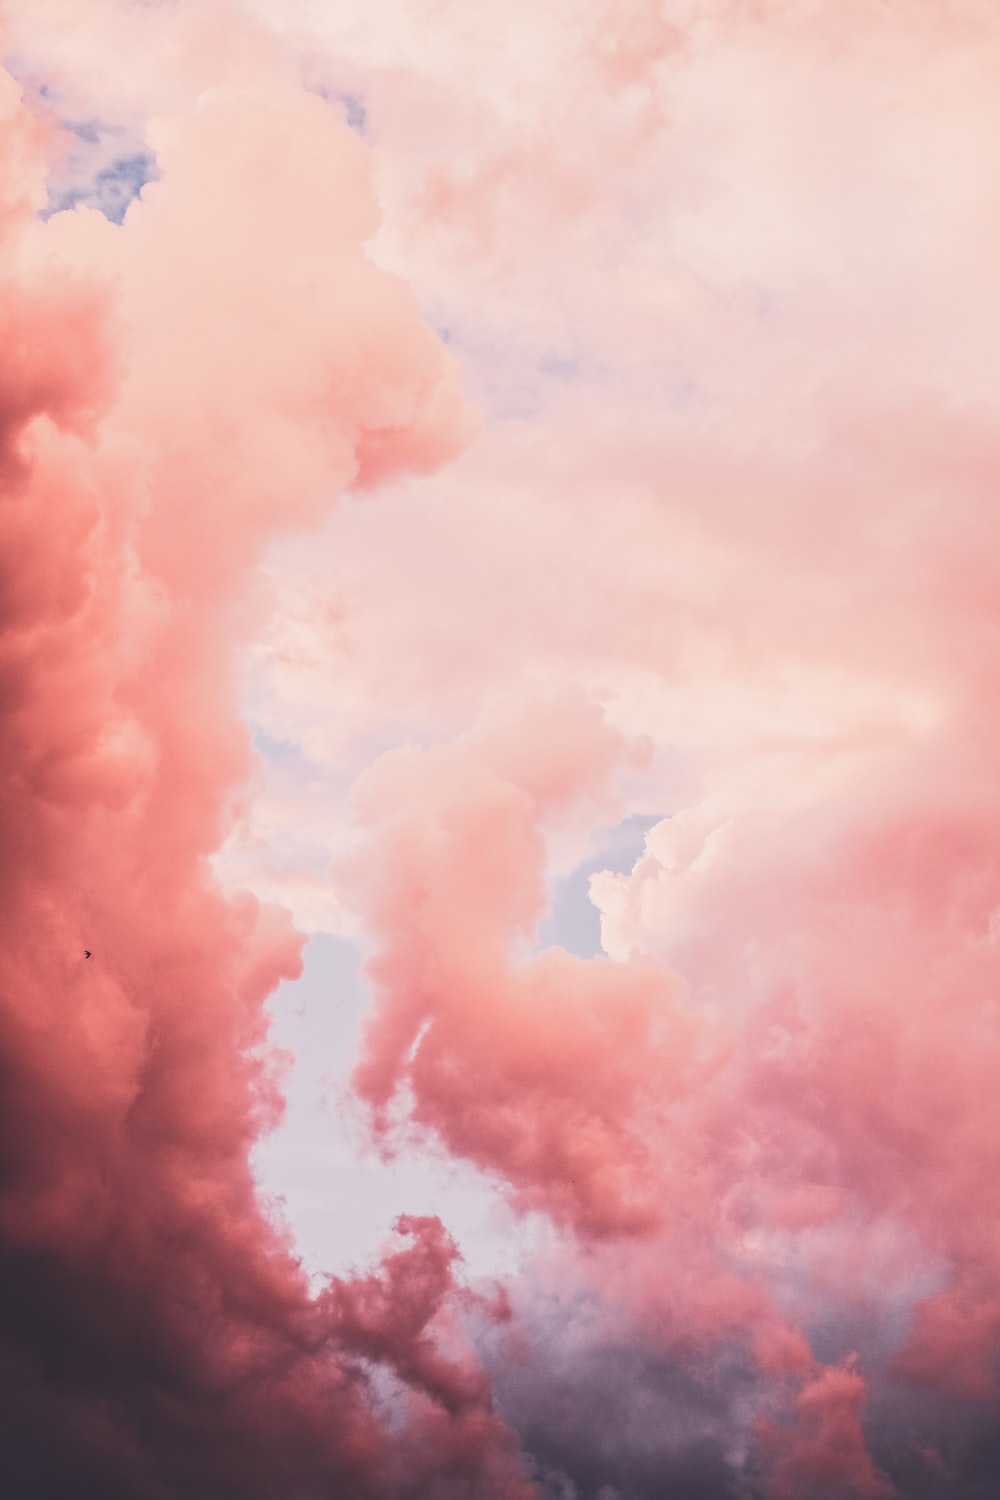 Aesthetic Pink Cloud Wallpapers